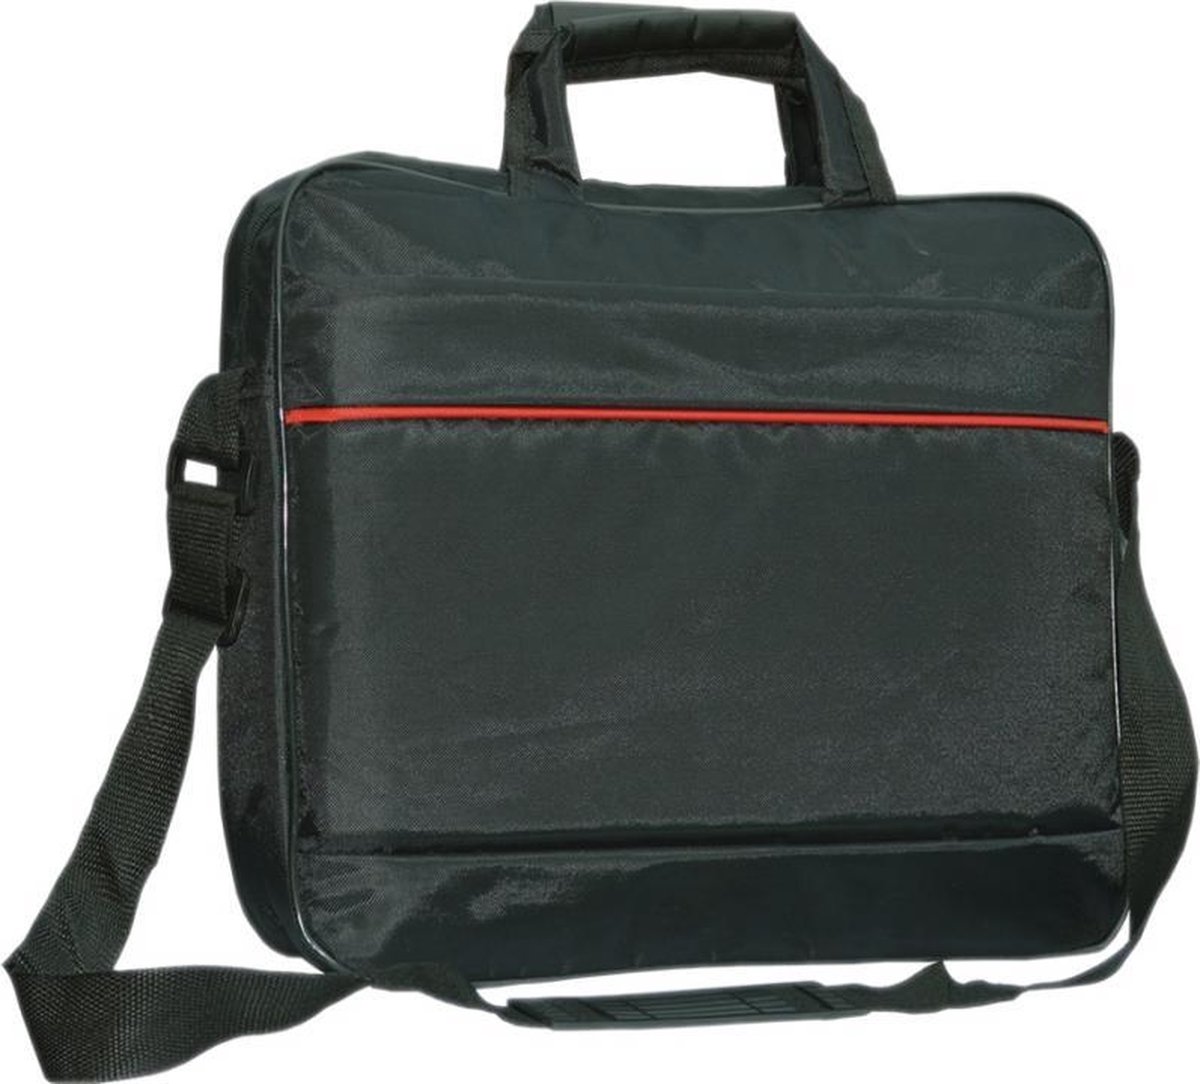 Lenovo Ideapad Yoga 2 Pro laptoptas messenger bag / schoudertas / tas , zwart , merk i12Cover